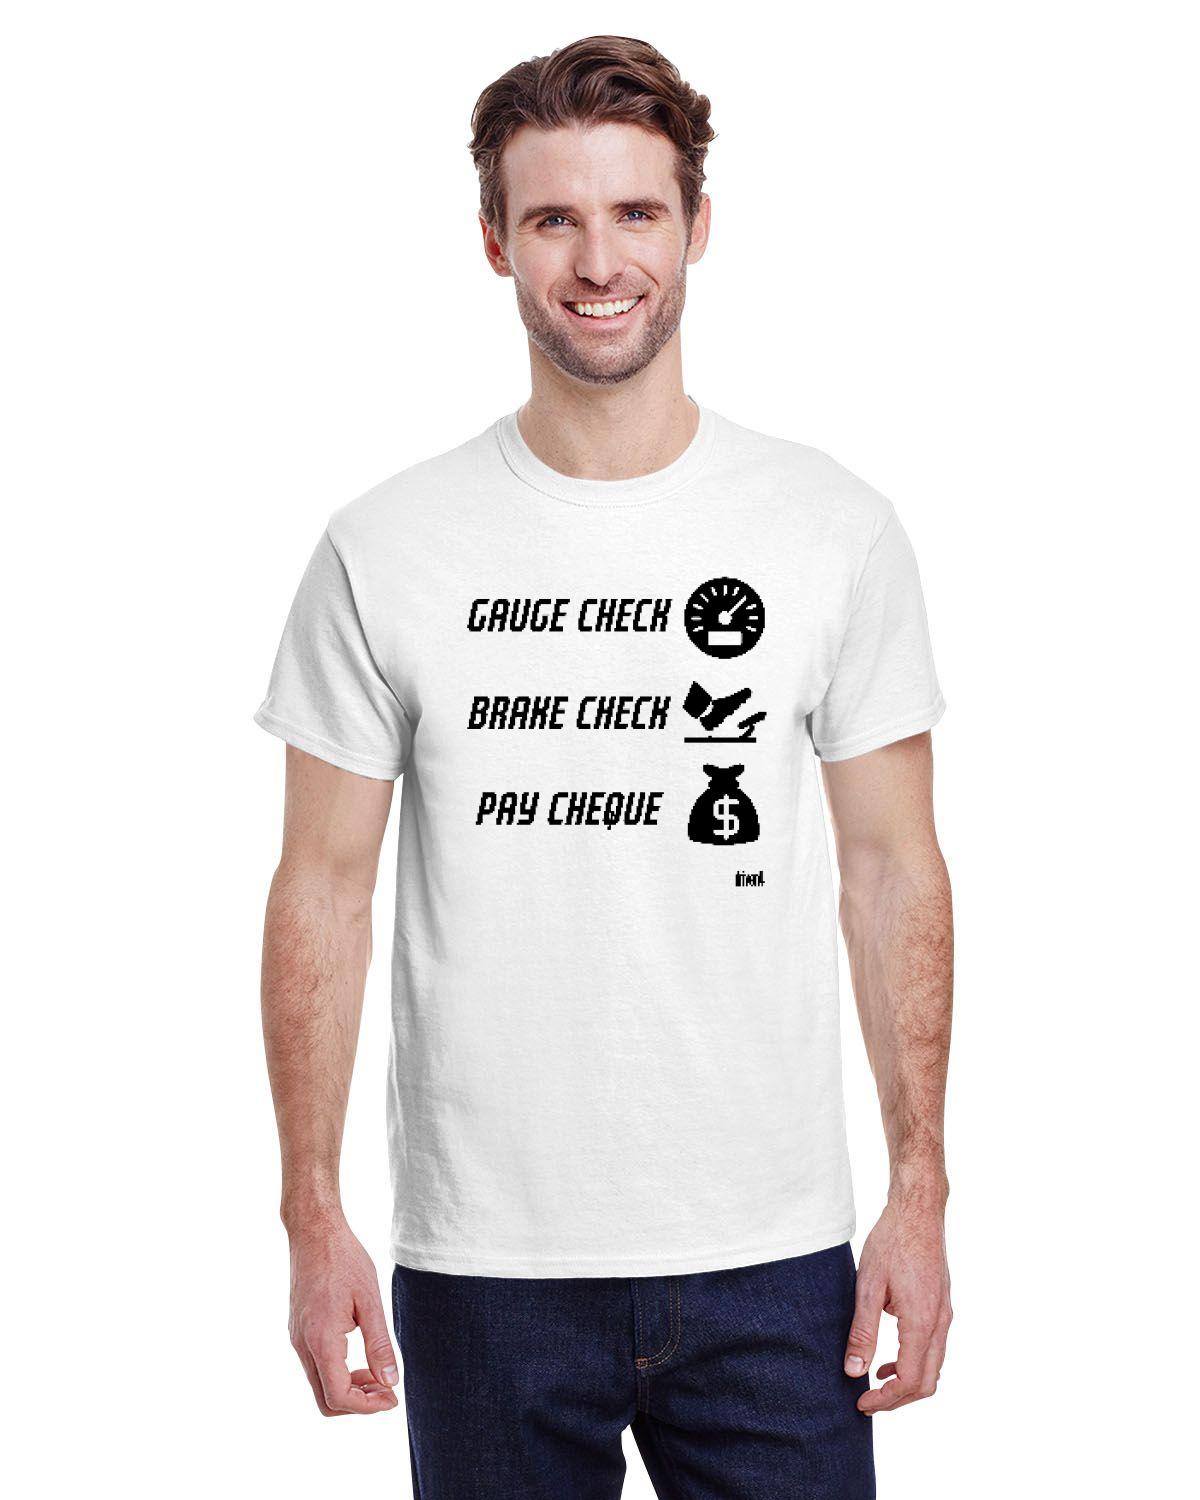 D4C Men's T-Shirt - Pay Cheque